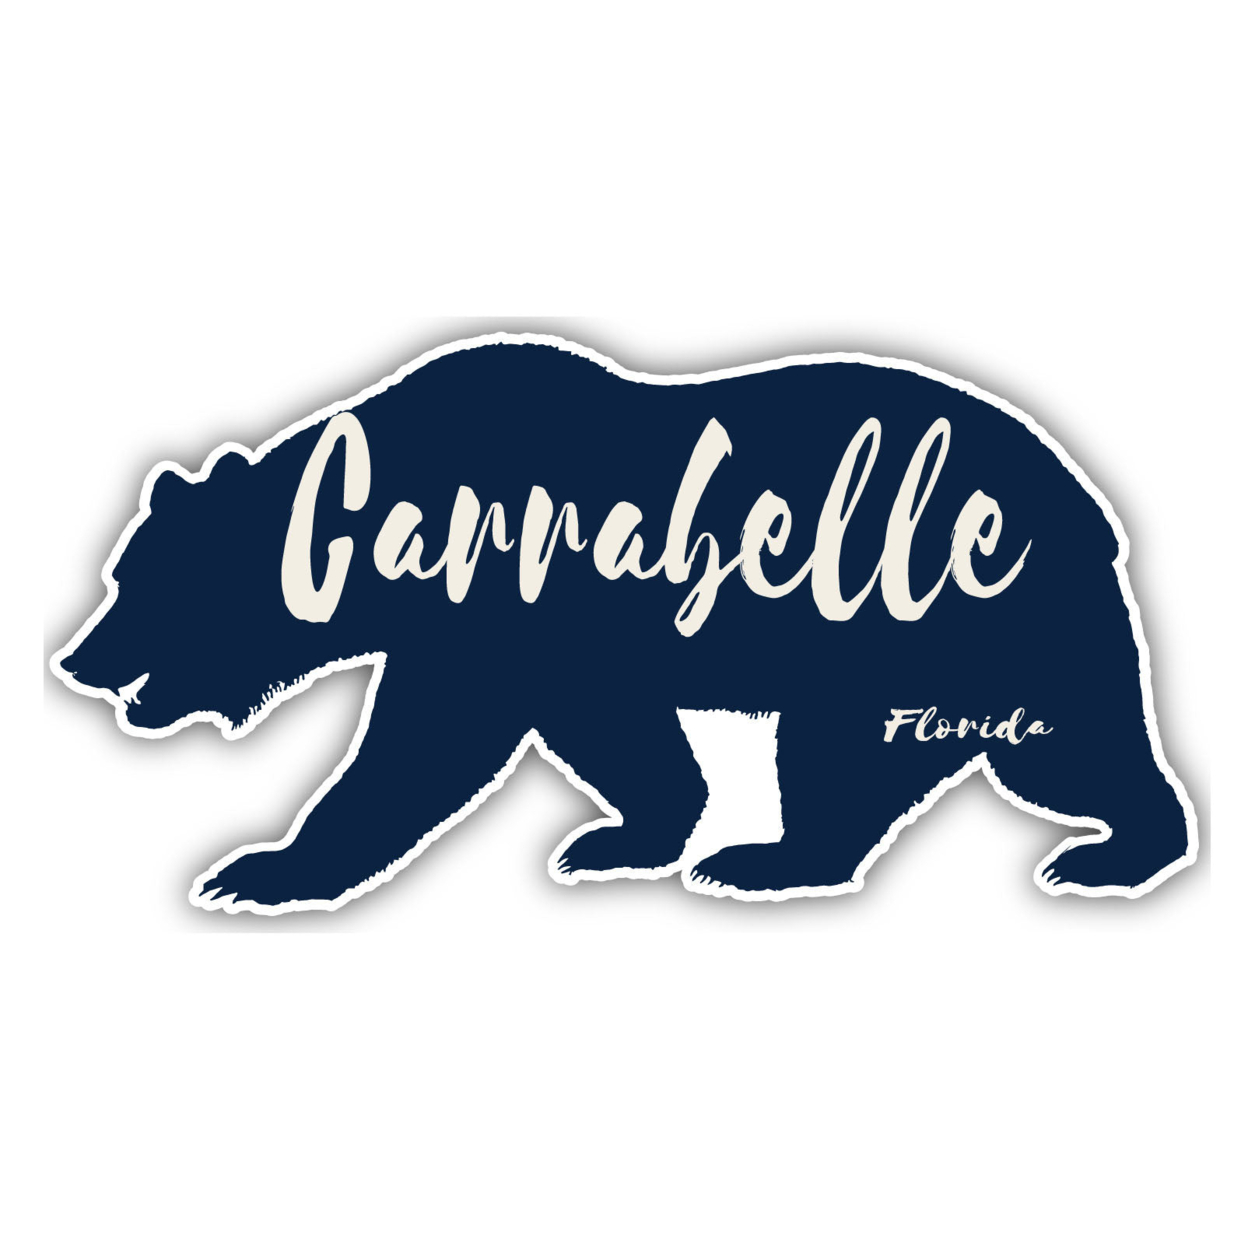 Carrabelle Florida Souvenir Decorative Stickers (Choose Theme And Size) - 4-Pack, 12-Inch, Bear